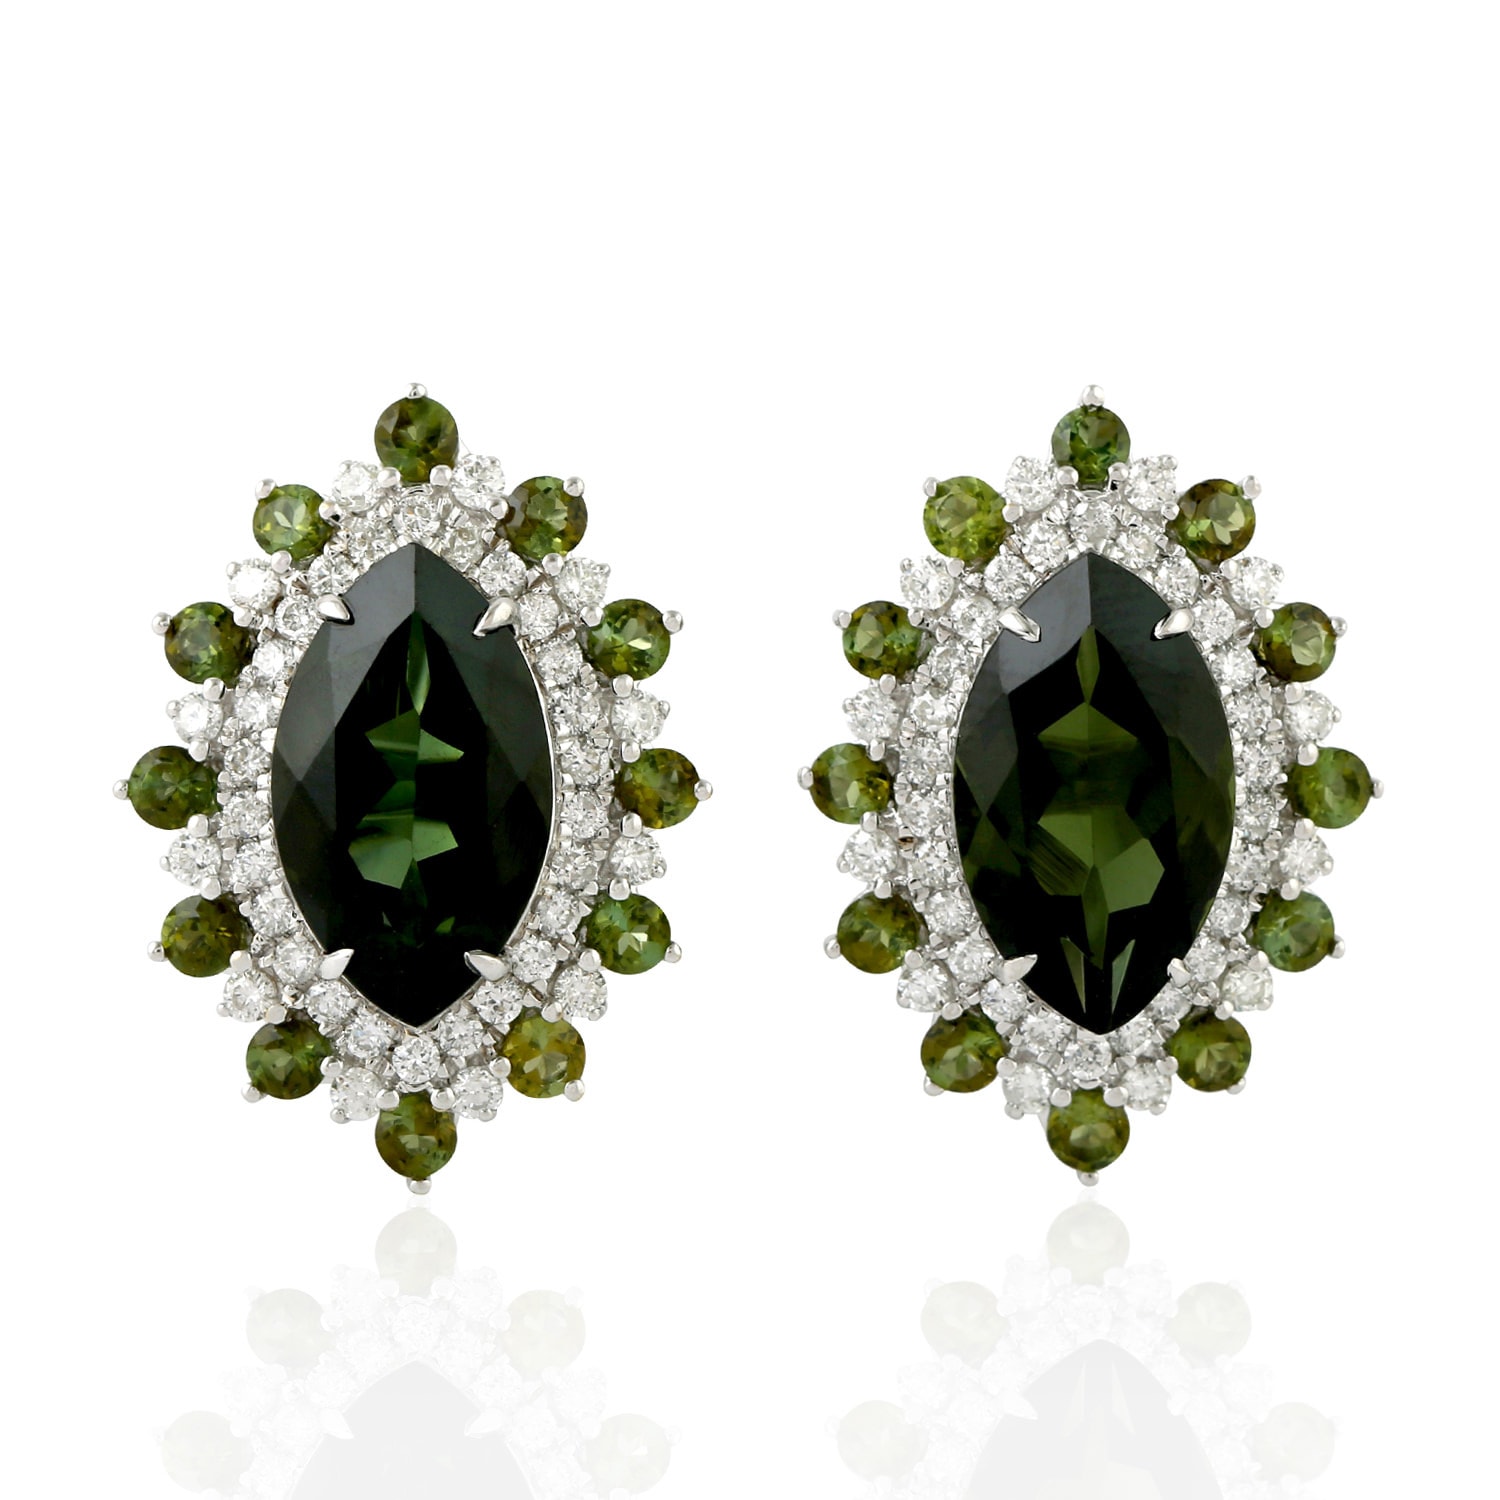 Green / White White Gold Marquise Shape Diamond Stud Earrings Green Tourmaline Valentine Gift Jewelry For Women Artisan